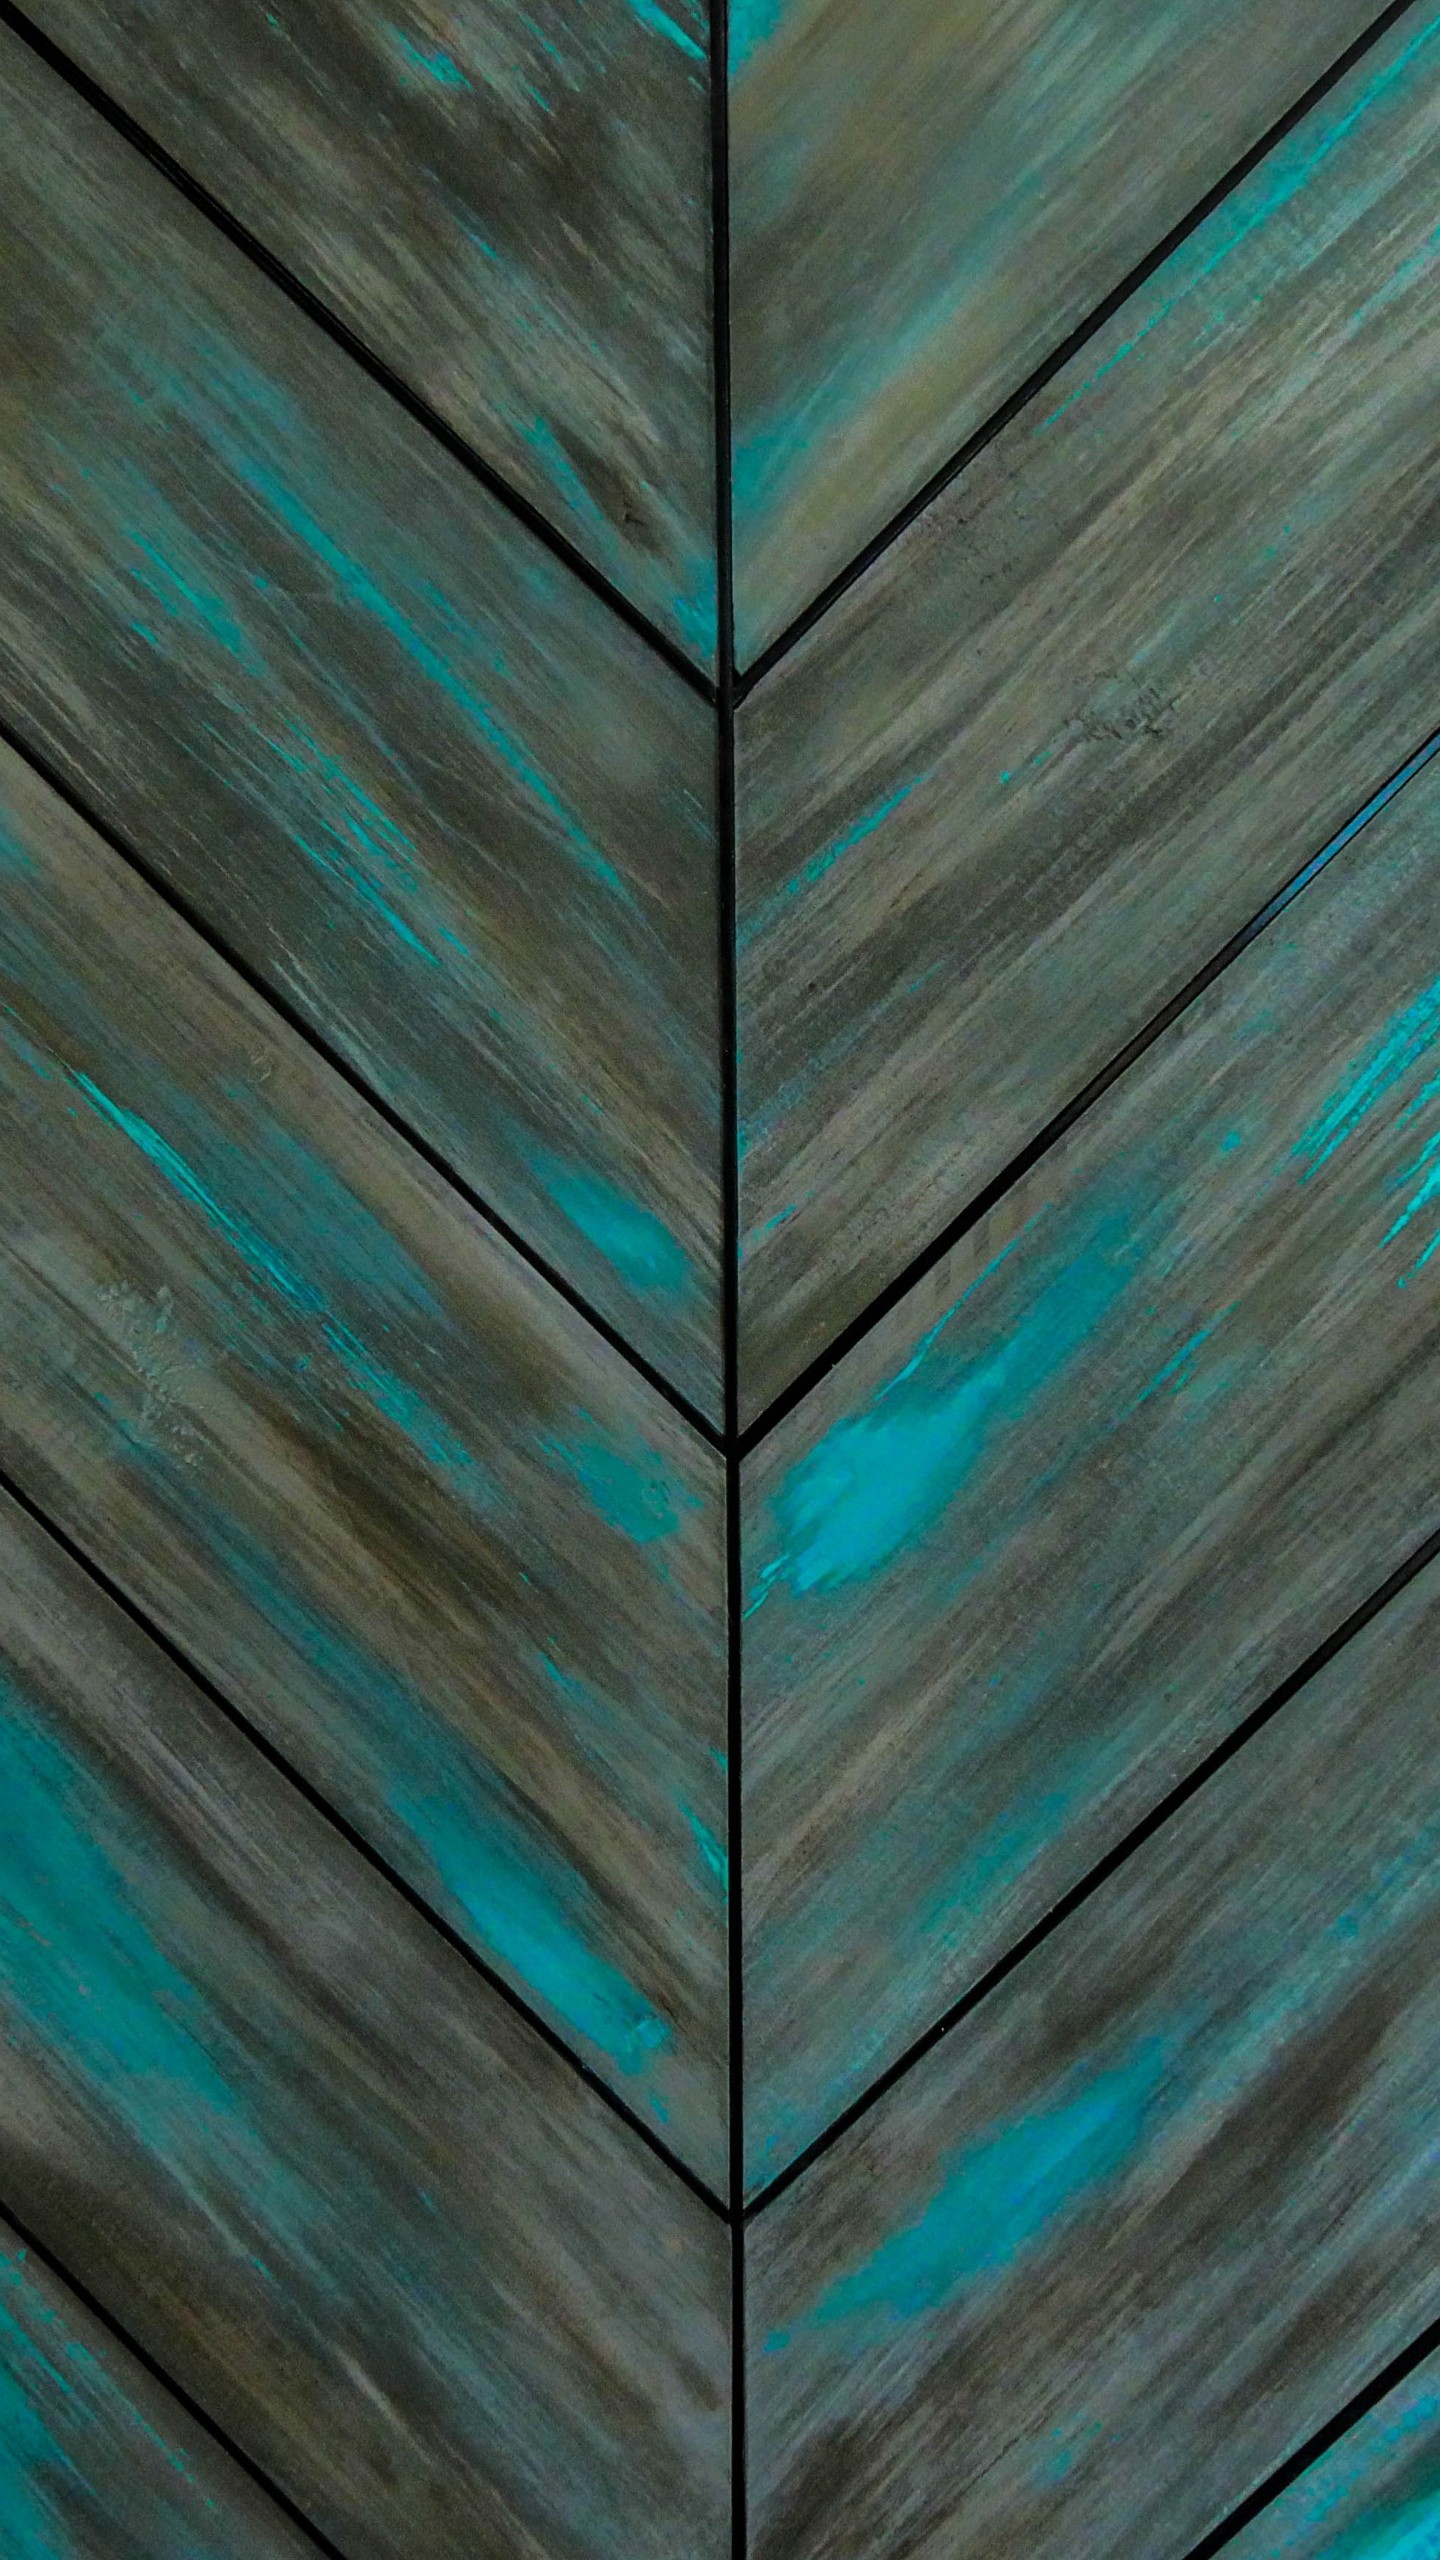 1440x2560 tapete,blau,aqua,grün,türkis,blaugrün